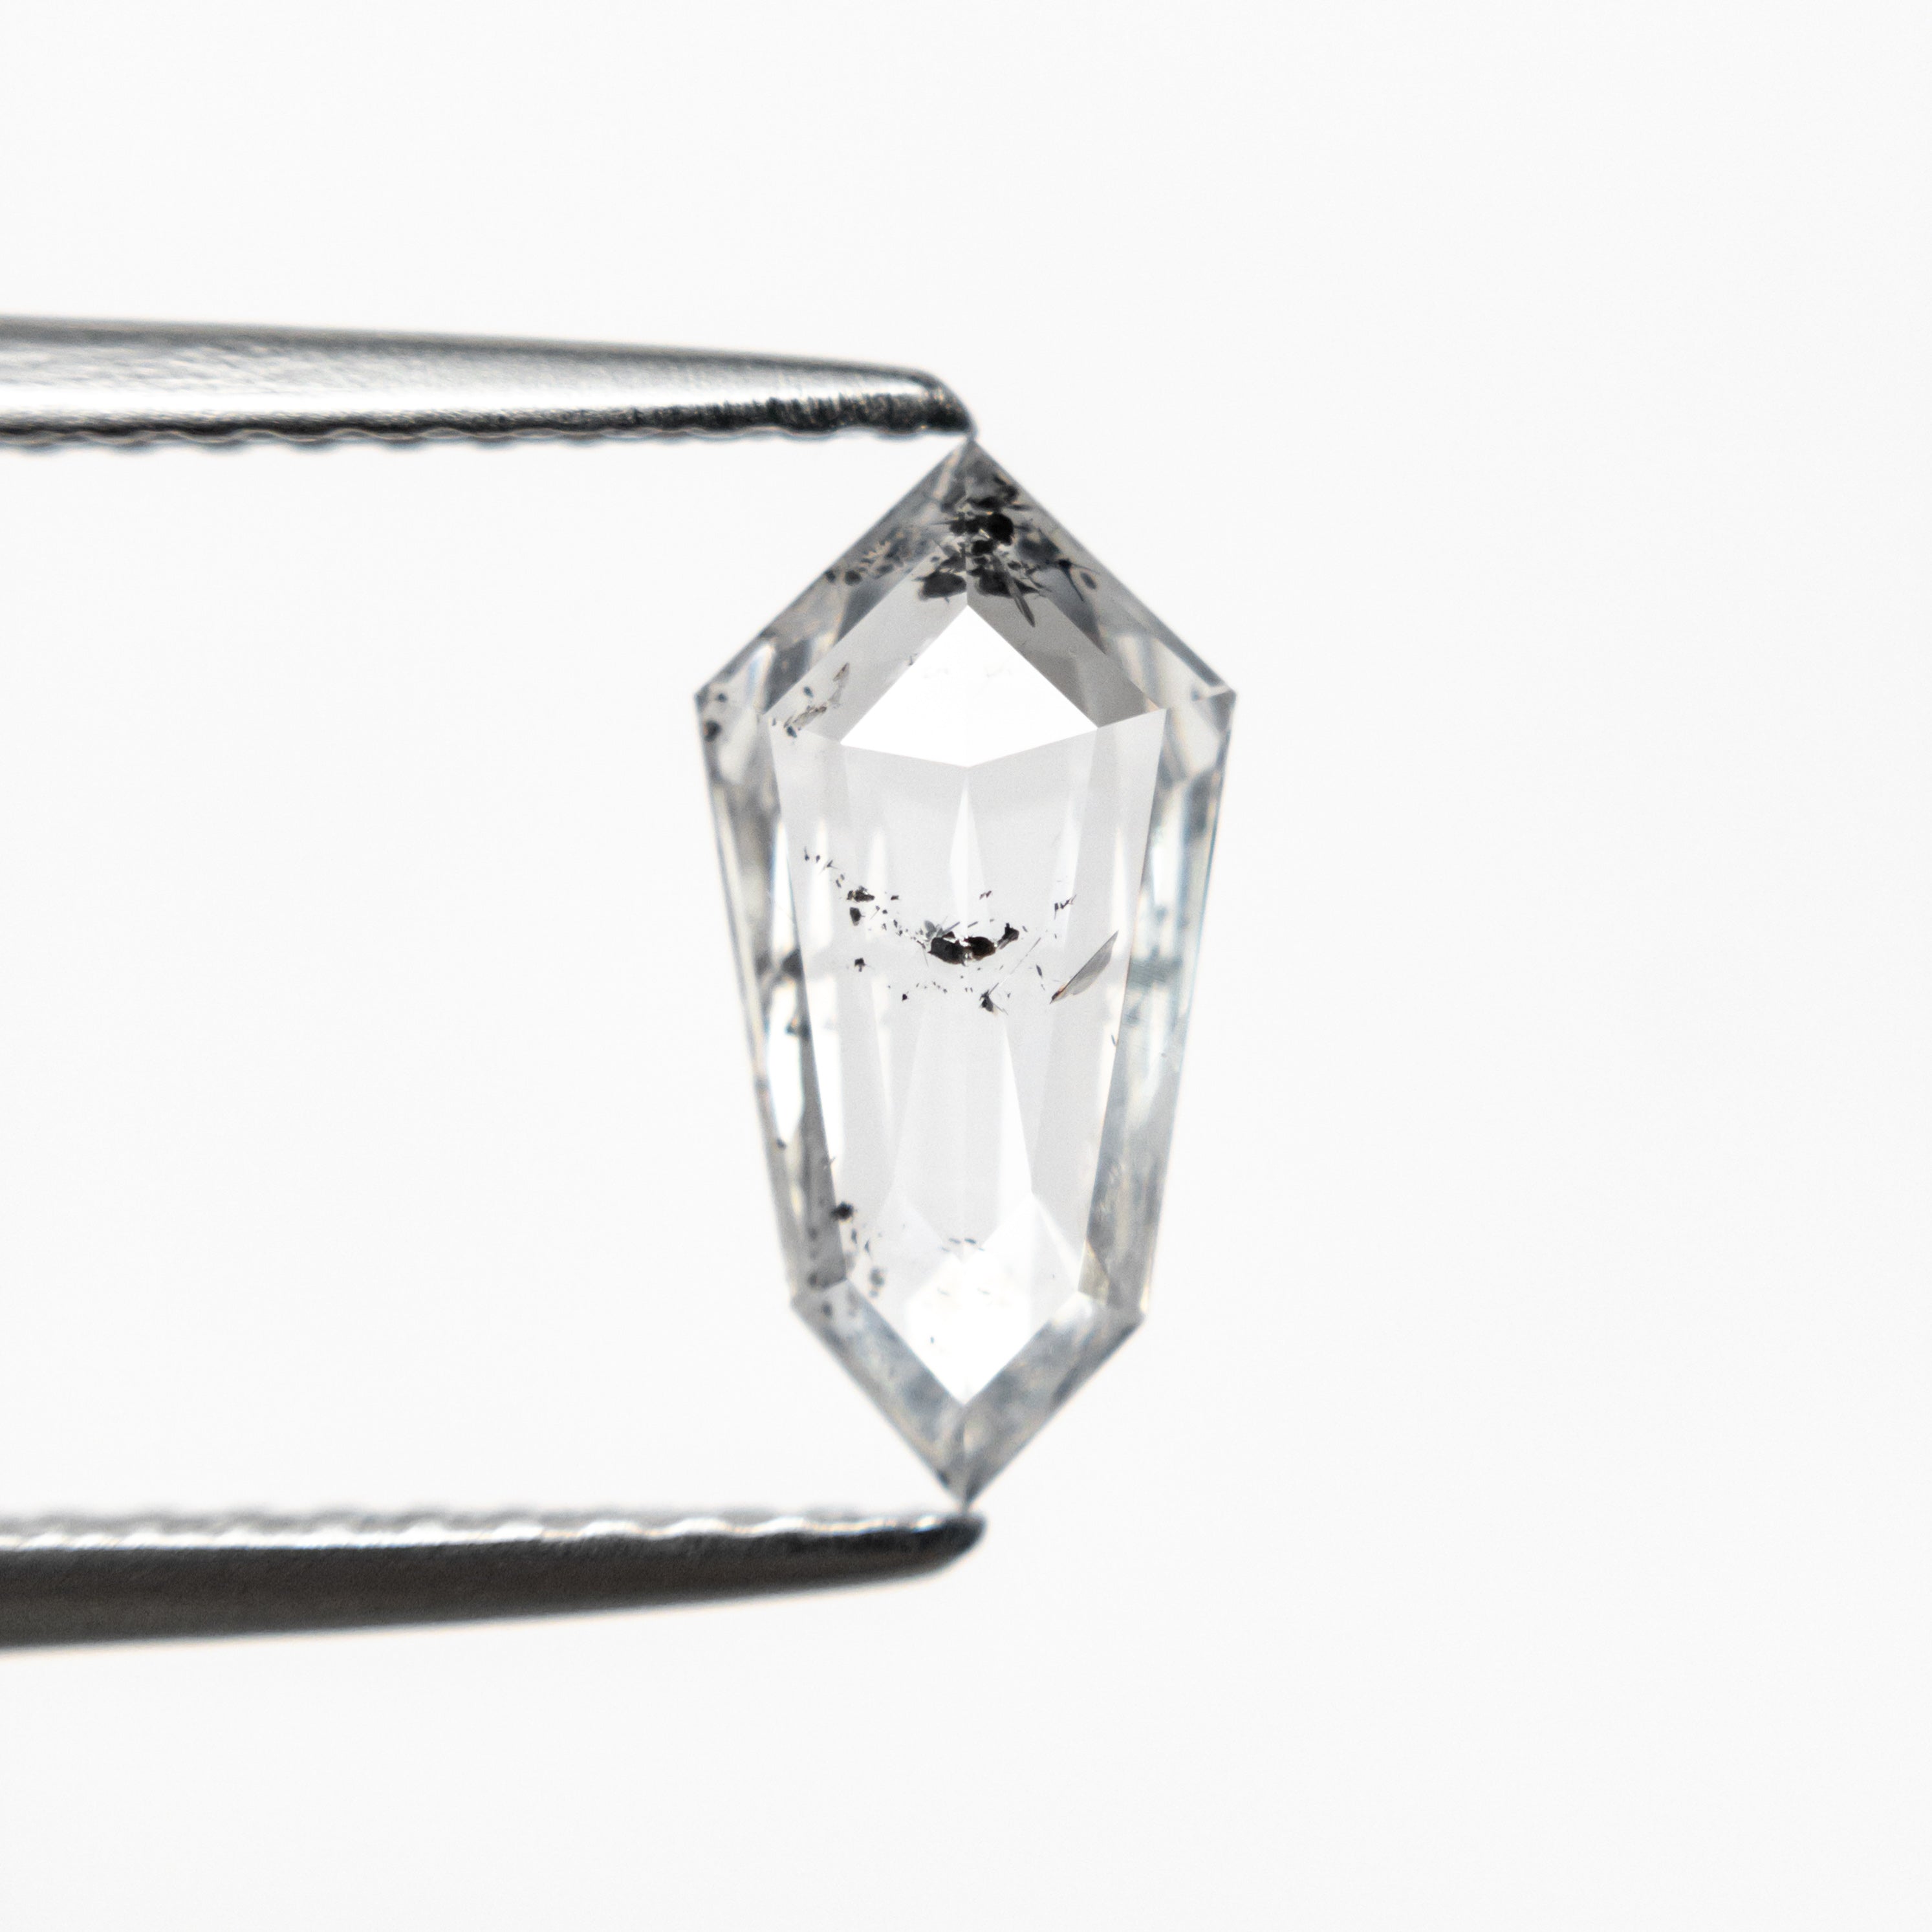 12th HOUSE loose gemstone 0.88ct Salt and Pepper Kite Rosecut diamond